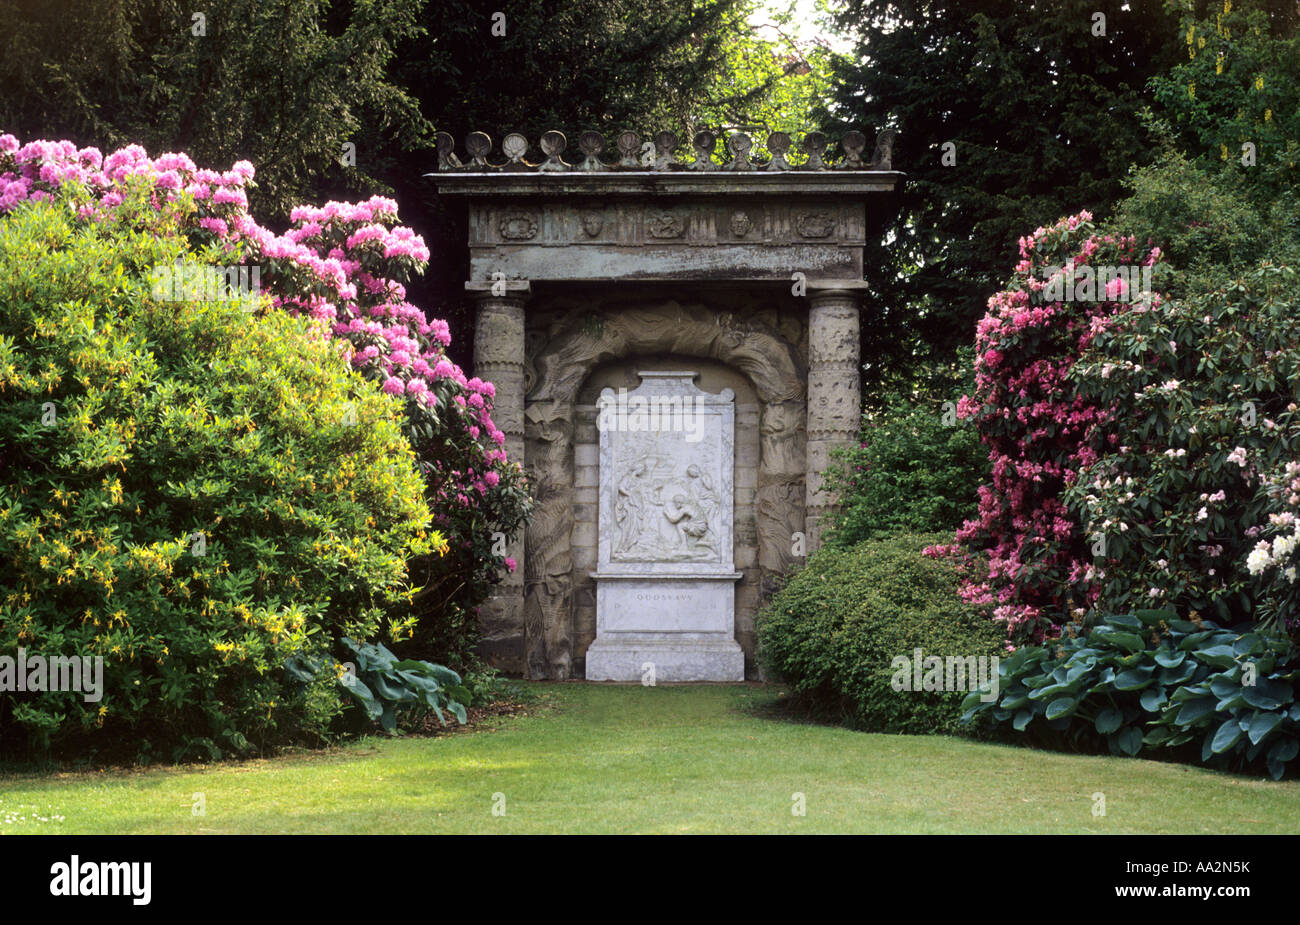 Garten Denkmal, klassischen Funktion, Rhododendren, Shugborough, Staffordshire, England, UK, verfügt über Garten, Ornament Stockfoto